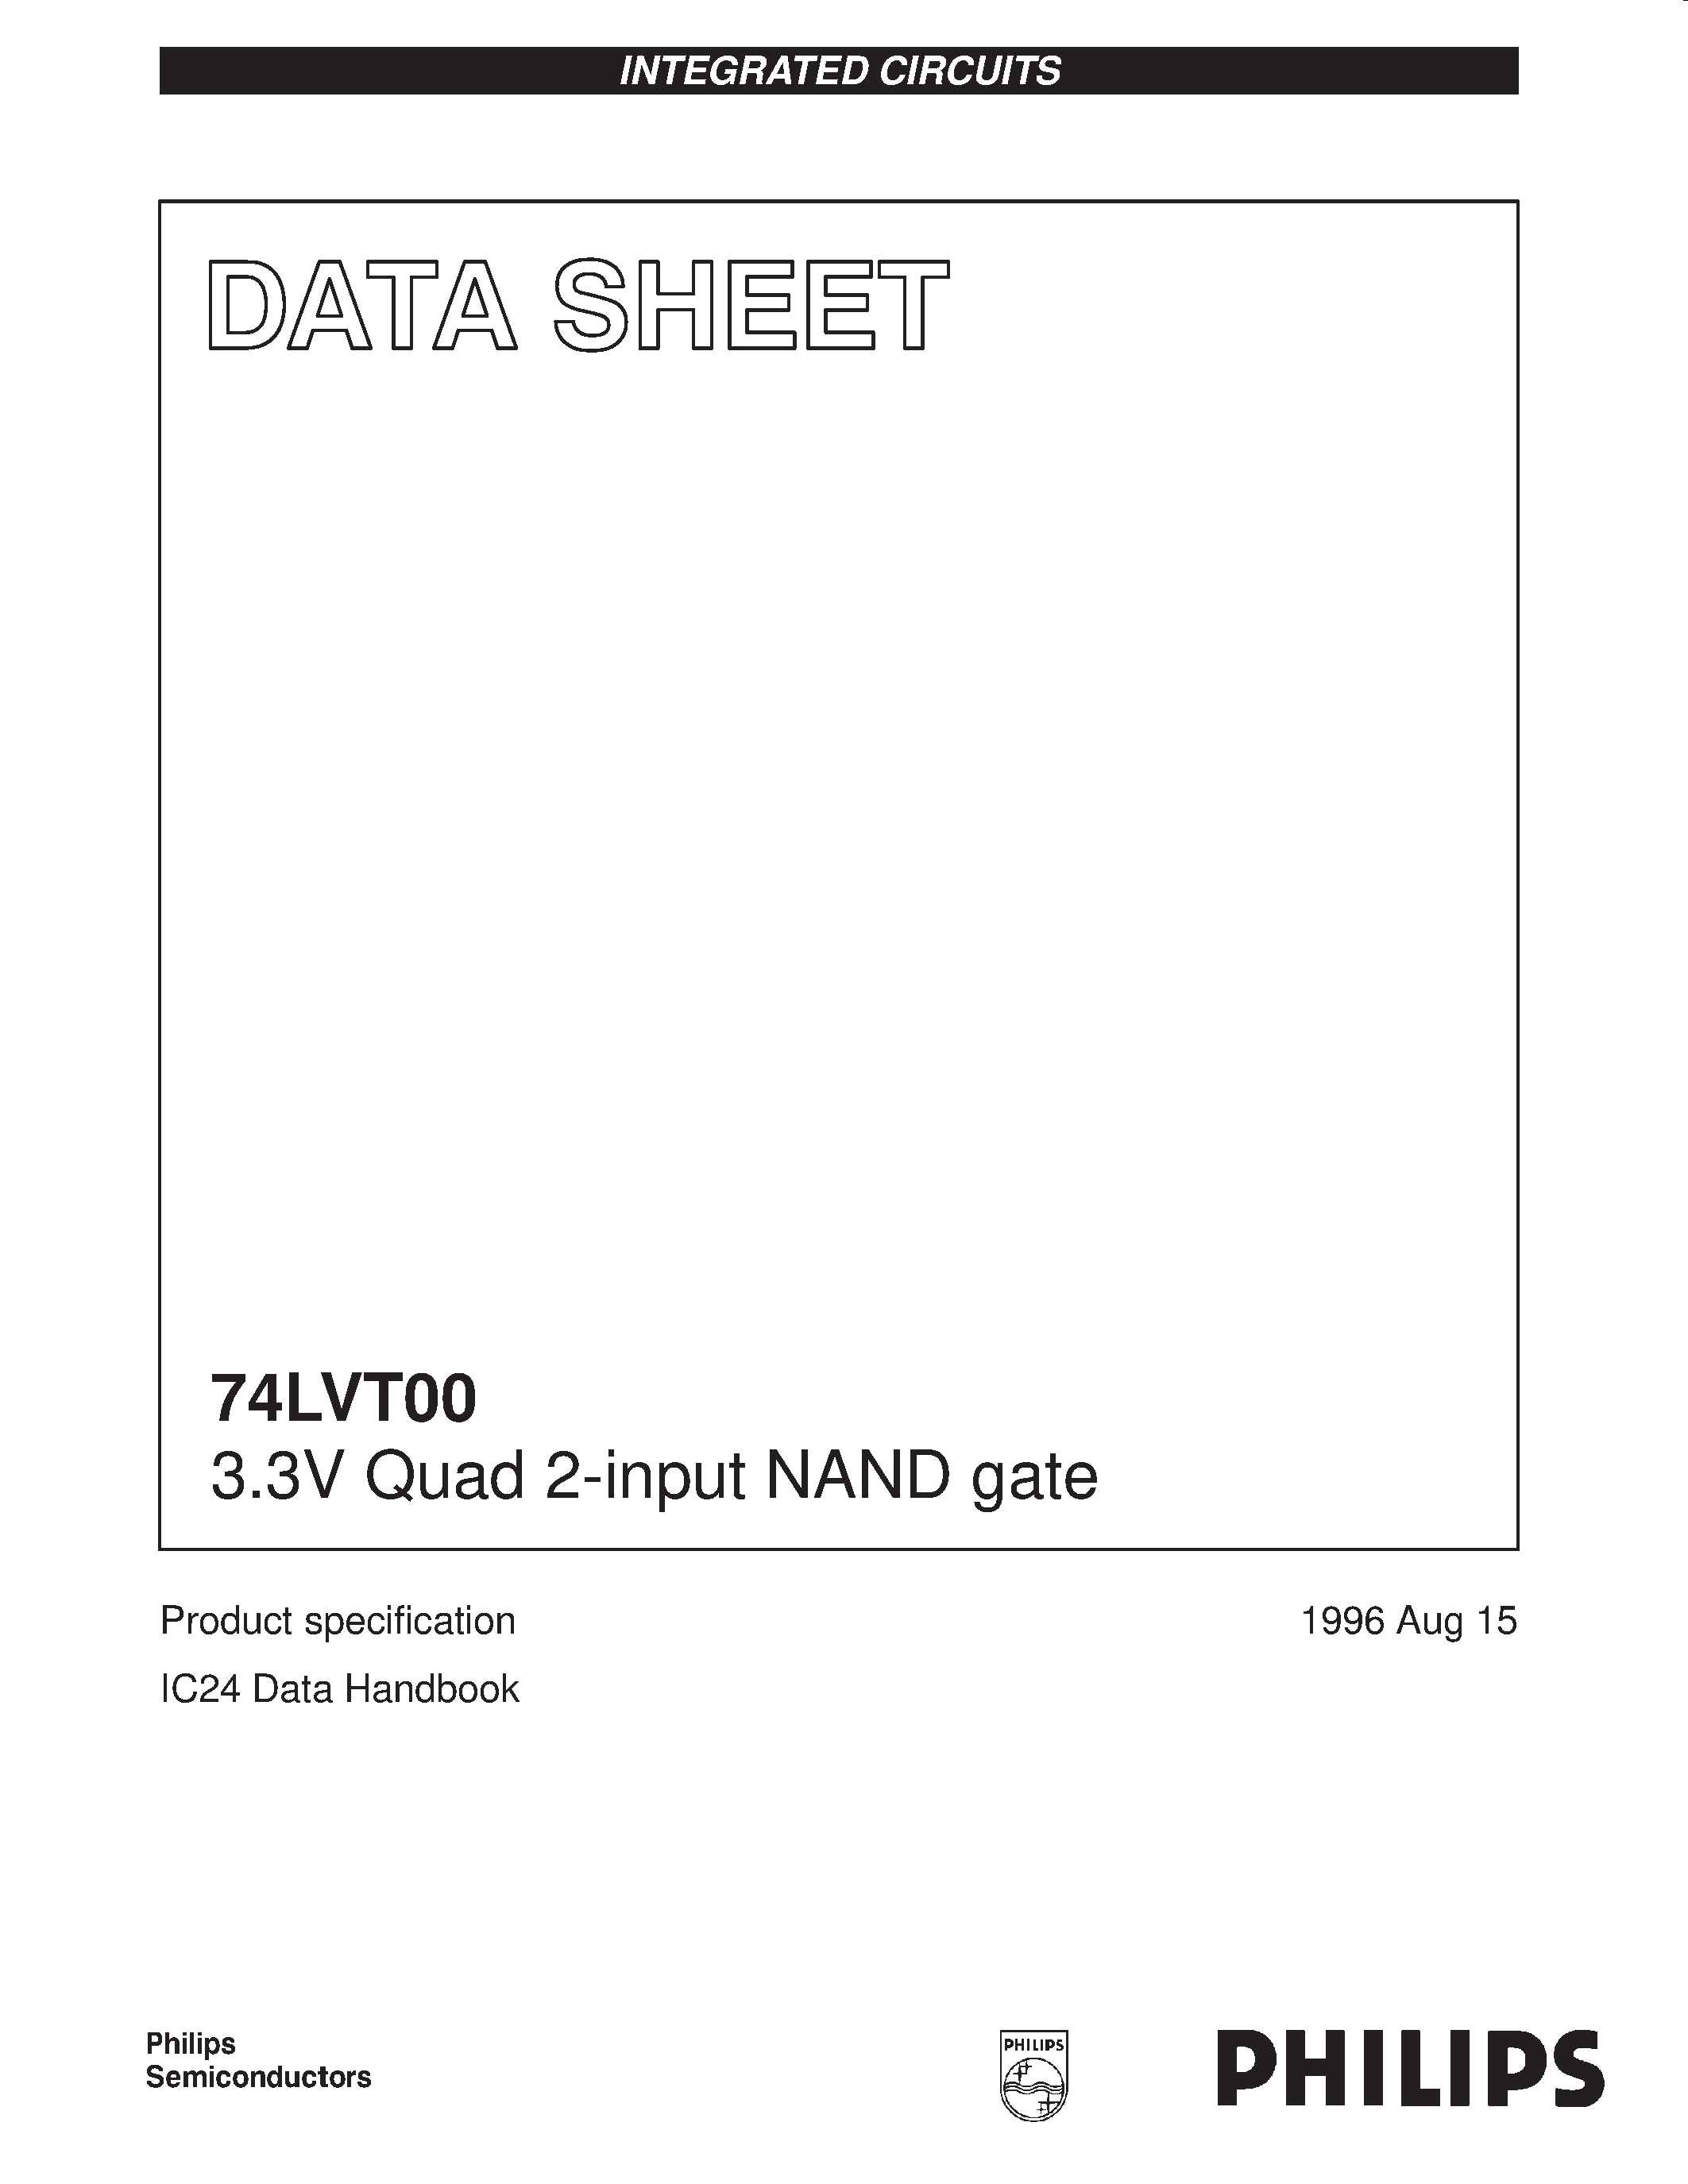 Datasheet 74LVT00 - 3.3V Quad 2-input NAND gate page 1